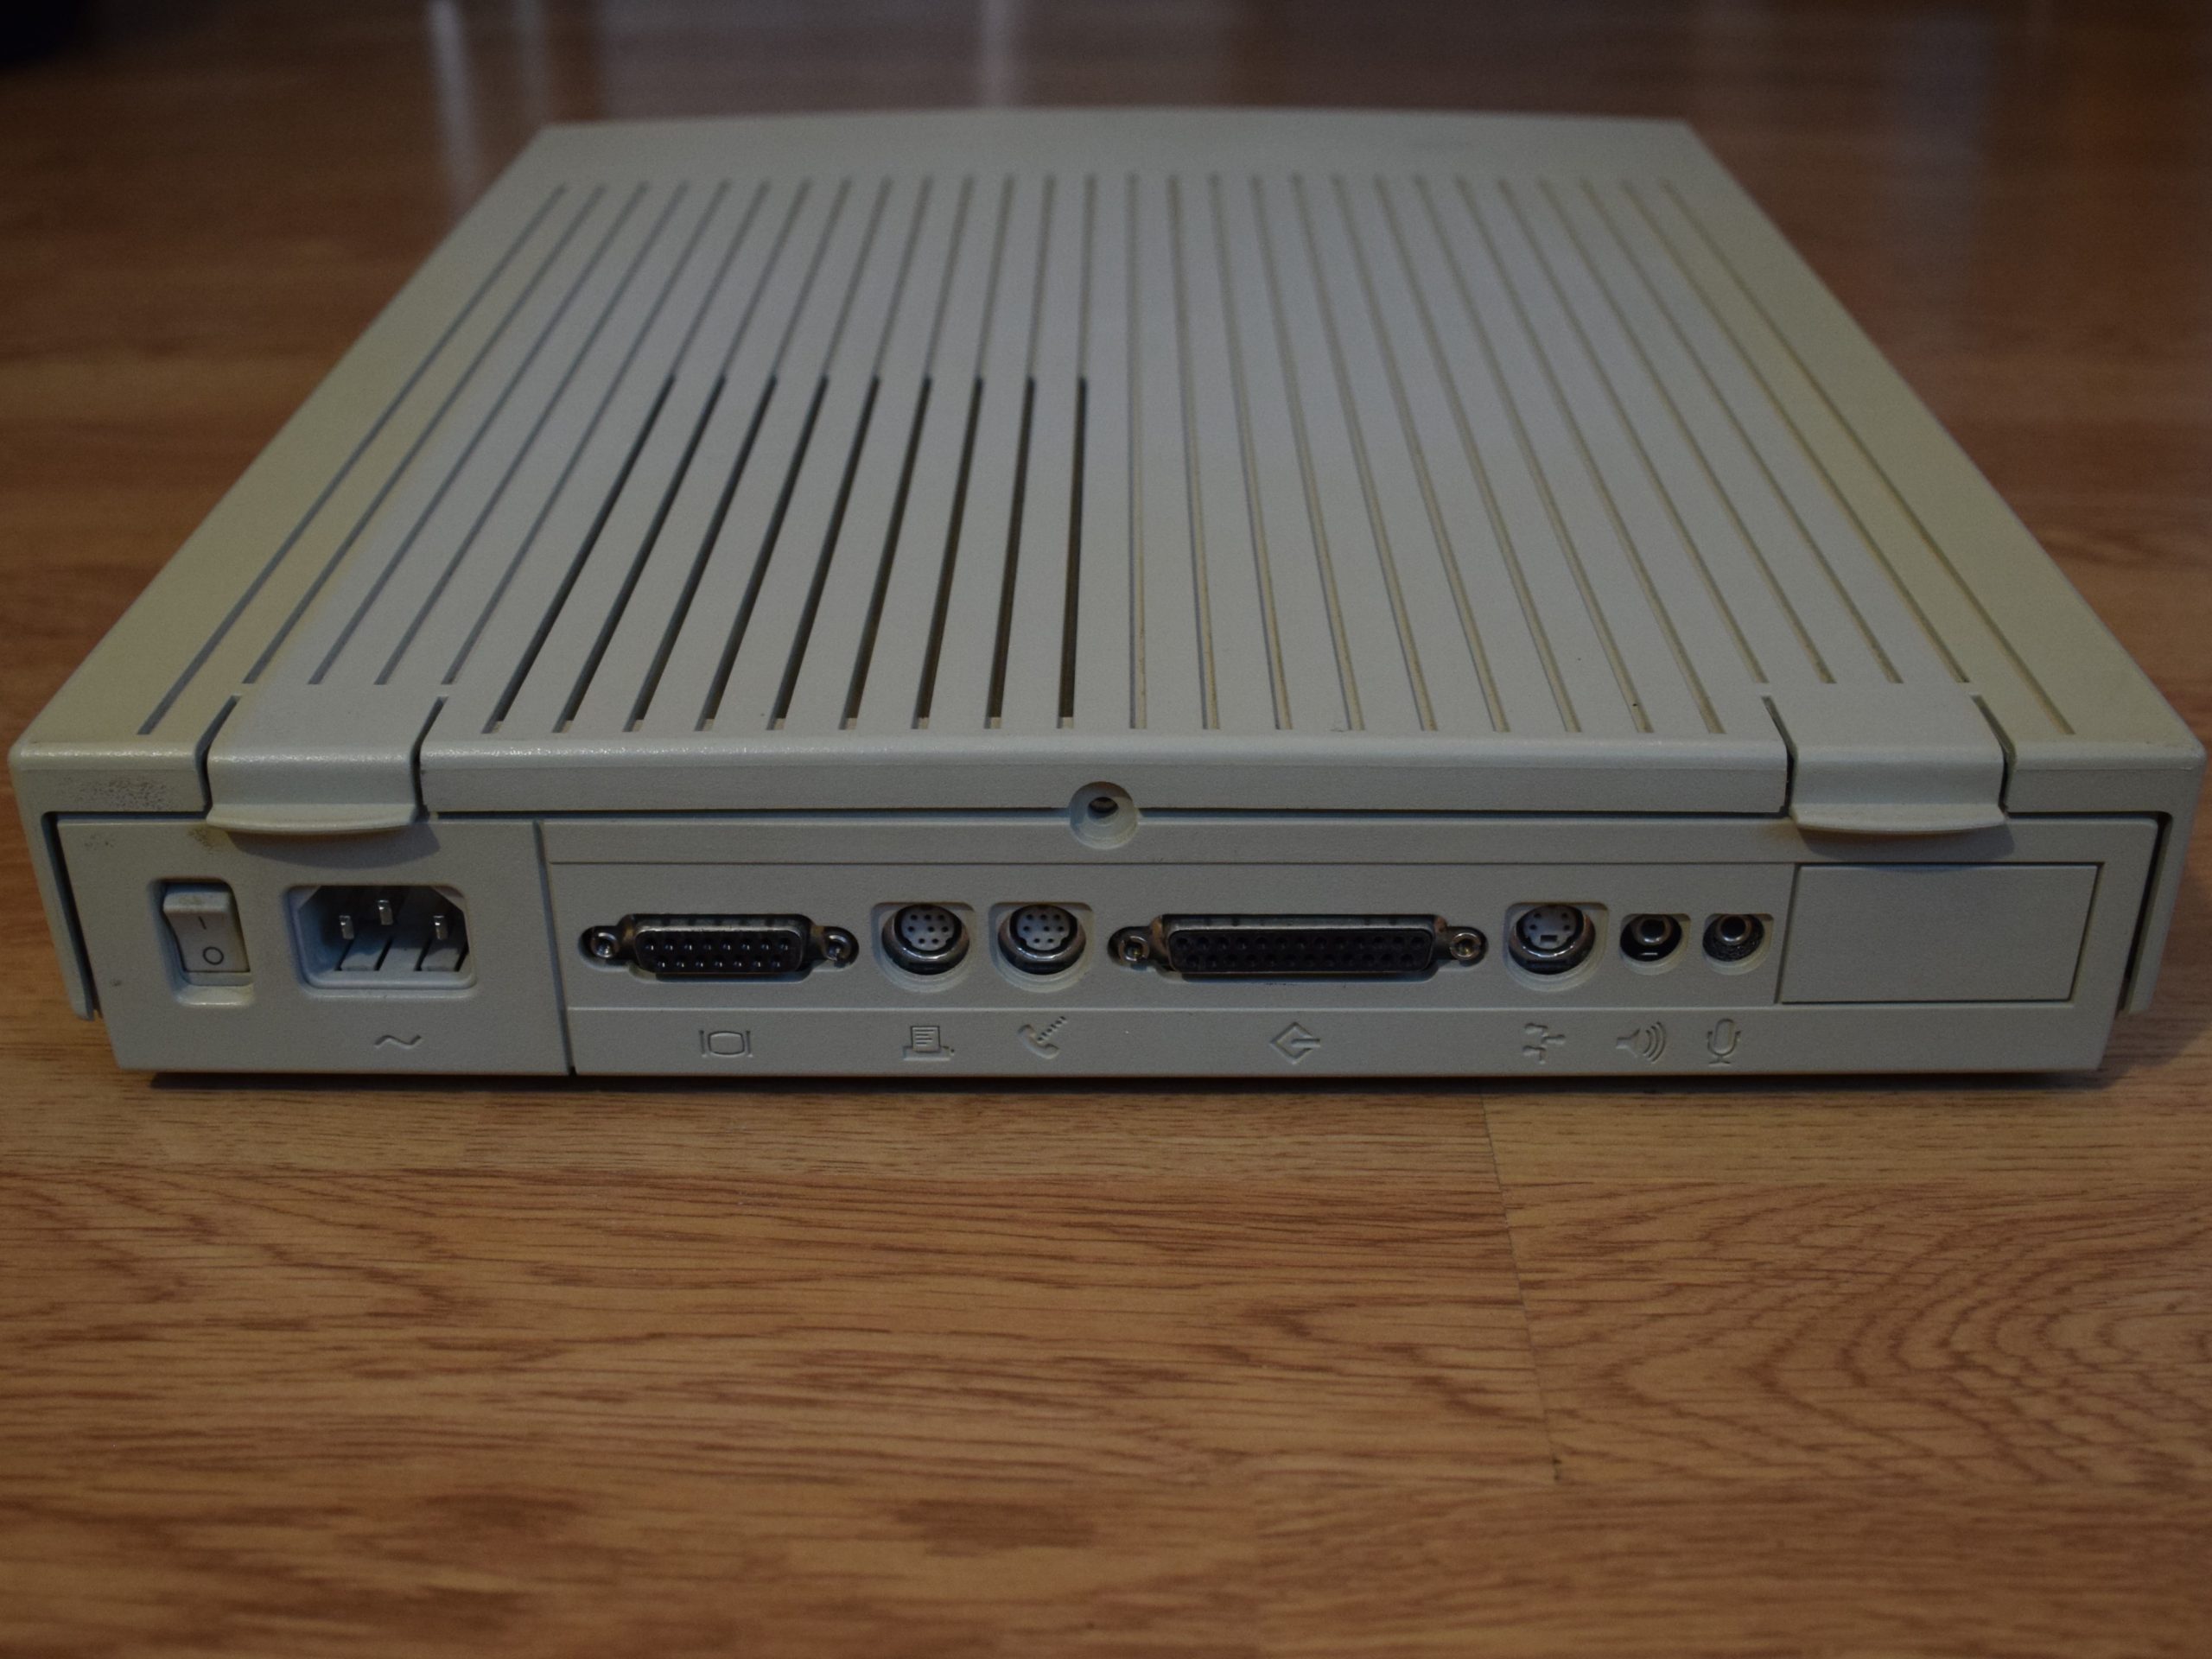 Macintosh LC III - ports